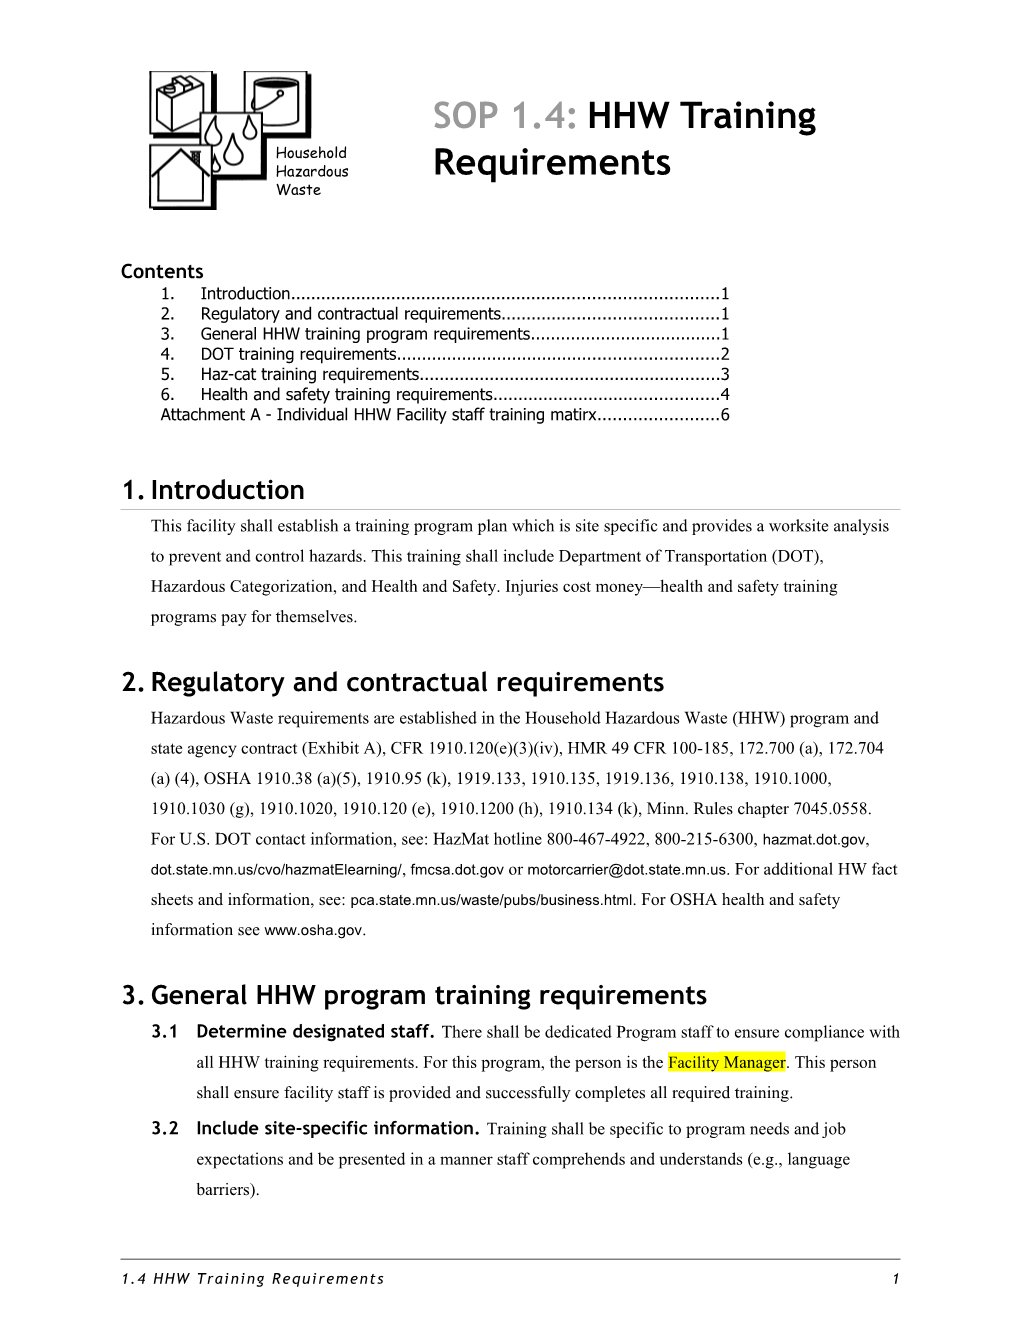 SOP 1.4: HHW Training Requirements